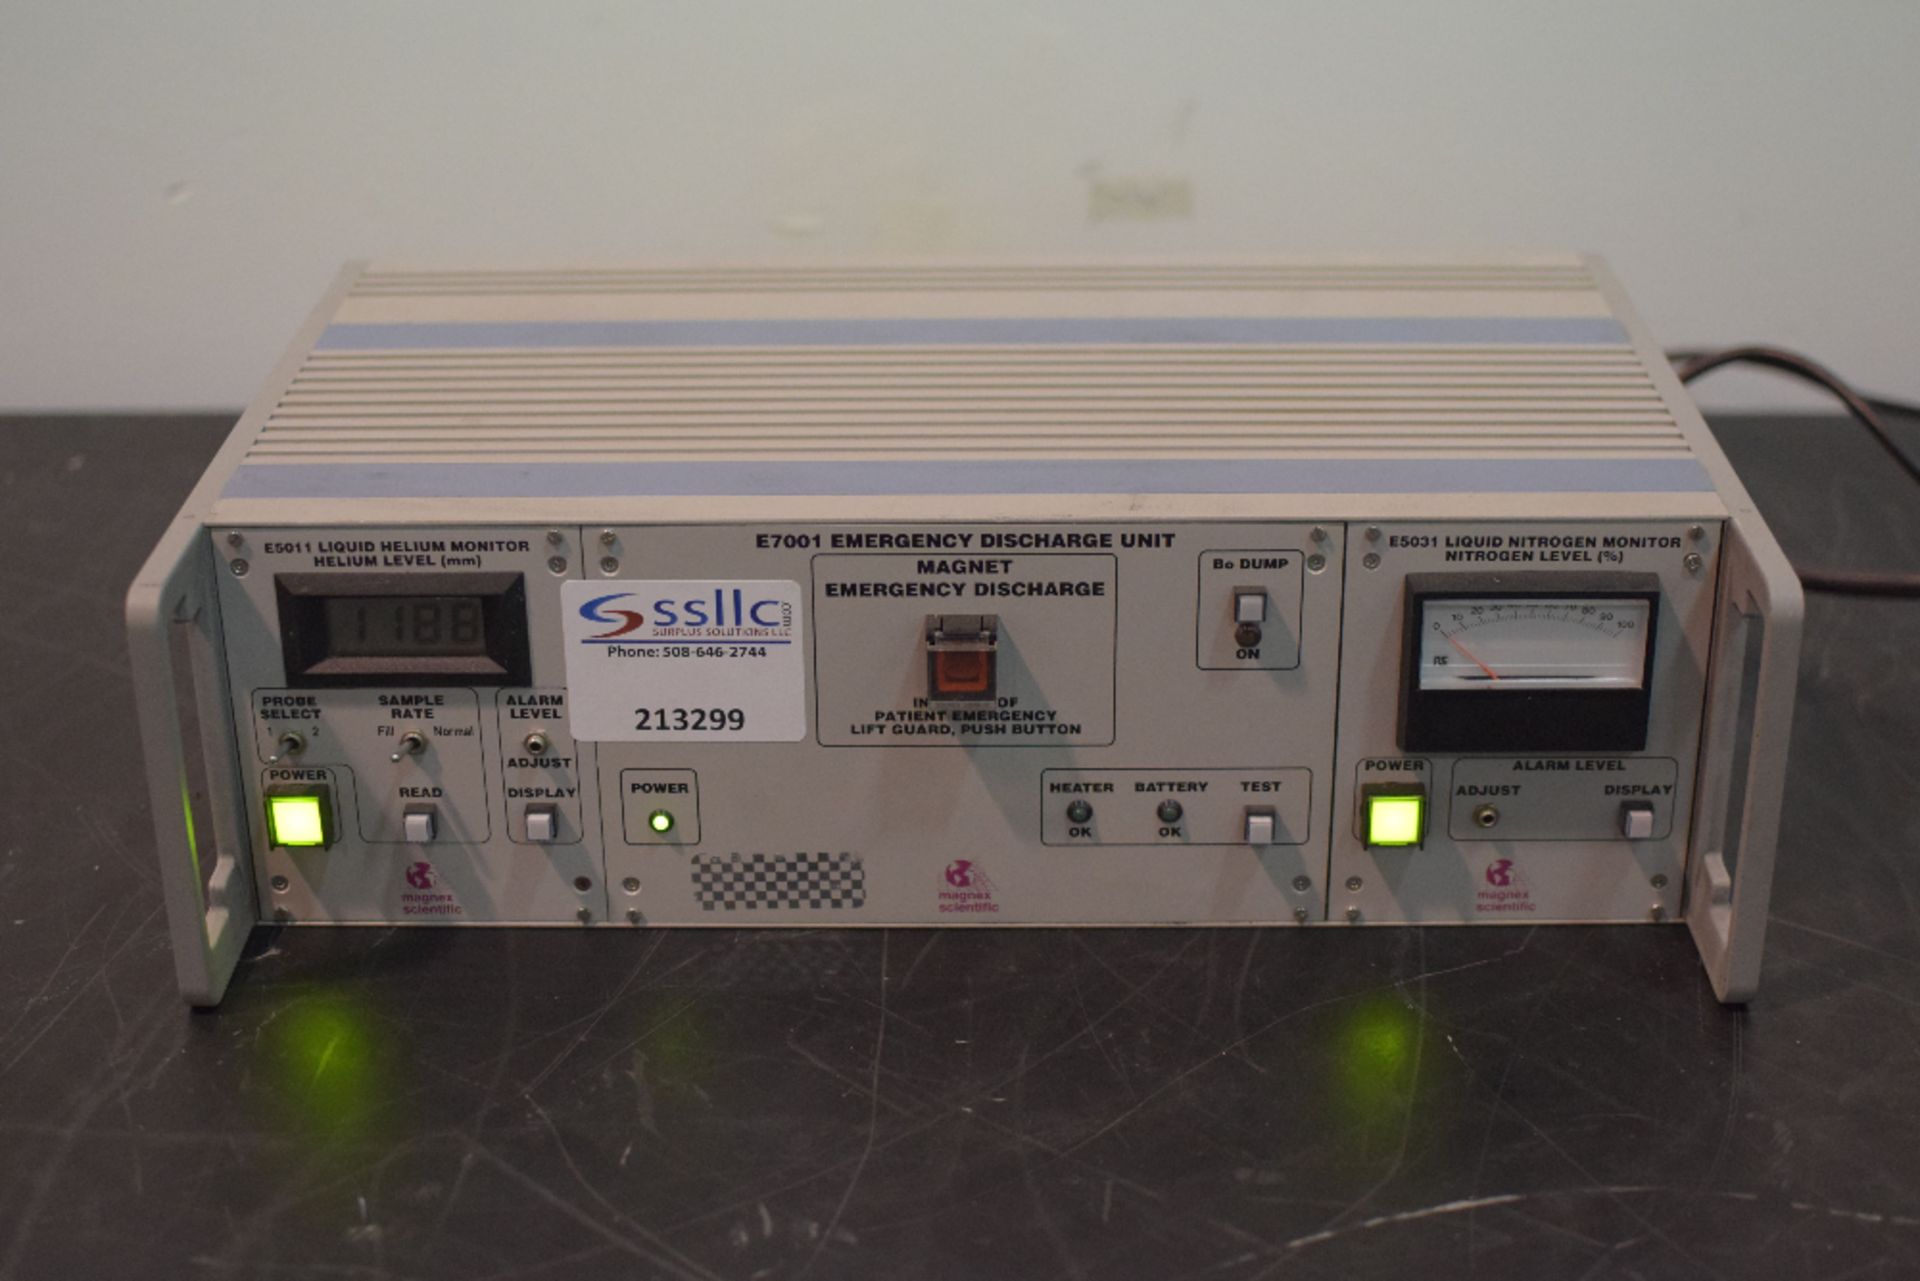 E5011 Liquid Helium Monitor/E7001 Emergency Discharge Unit/E5031 Liquid Nitrogen Monitor